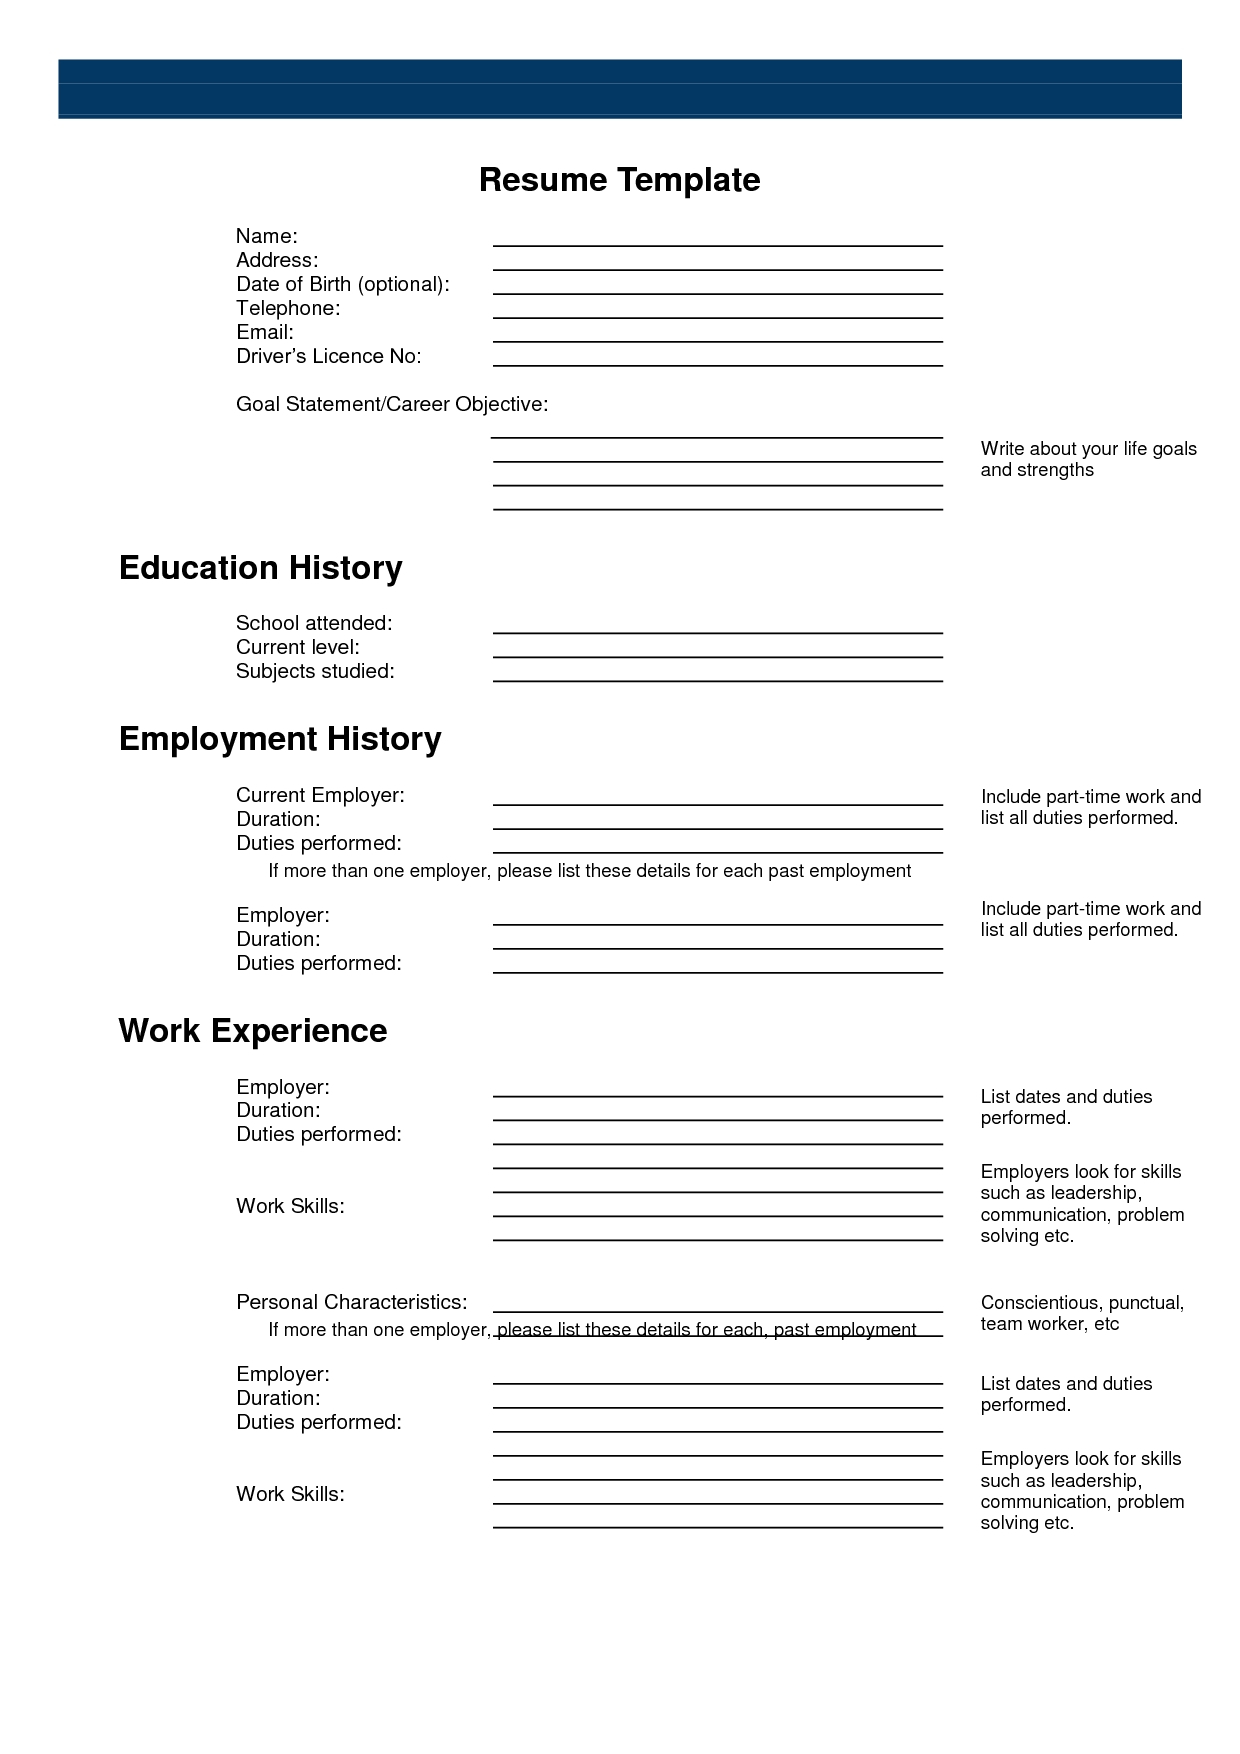 Resume Templates Online Free Printable - Free Resume Creator Online - Free Printable Resume Templates